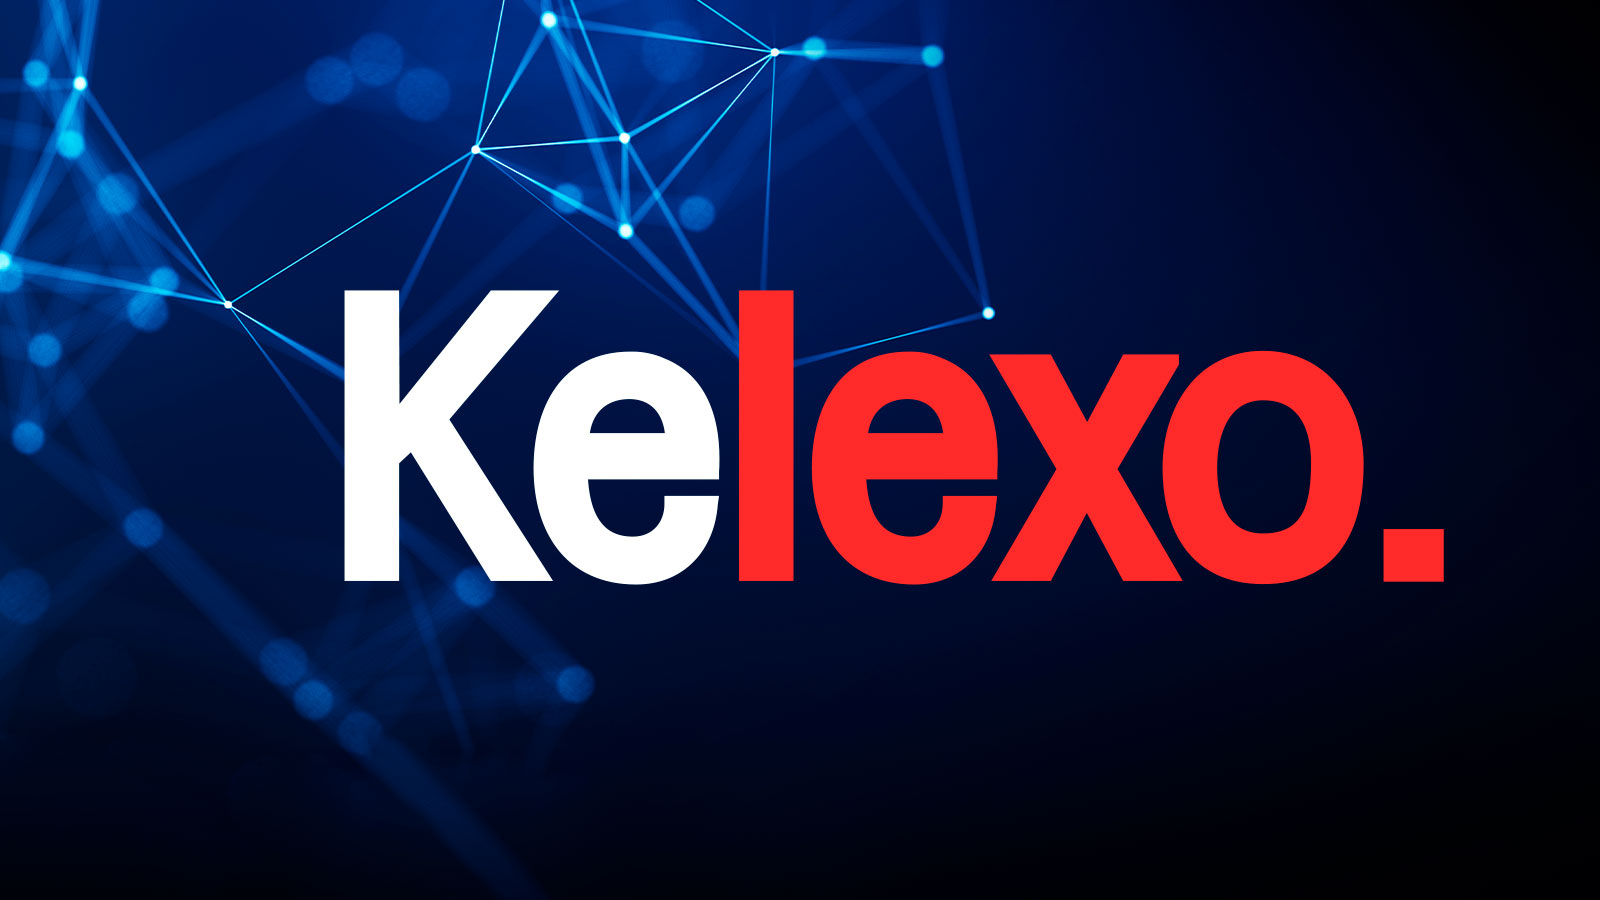 Monero (XMR) Oscillation Continues After Binance Platform Reform, Ethereum (ETH) New Target, Kelexo (KLXO) Presale Moves Forward